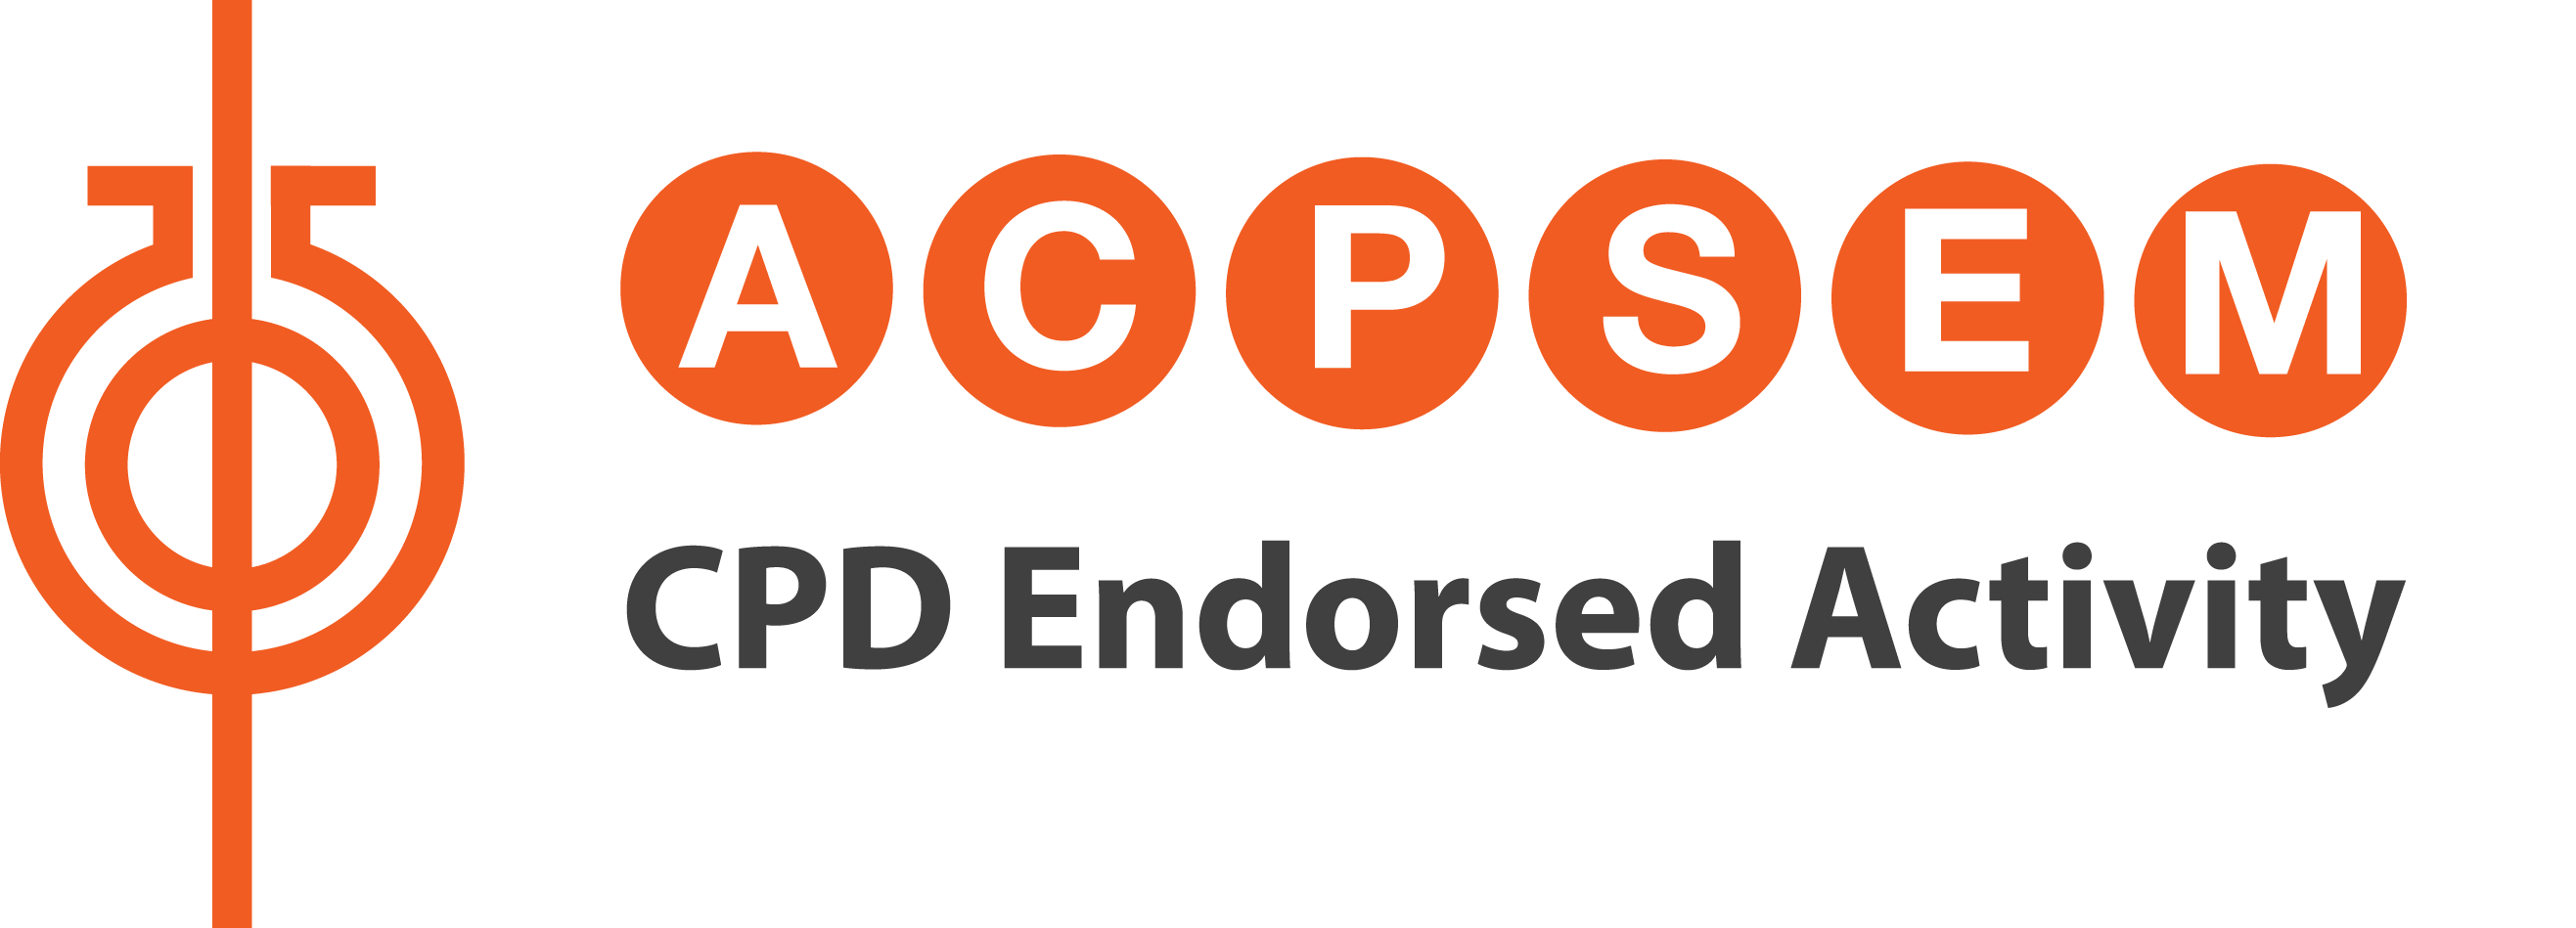 ACPSEM endorsement